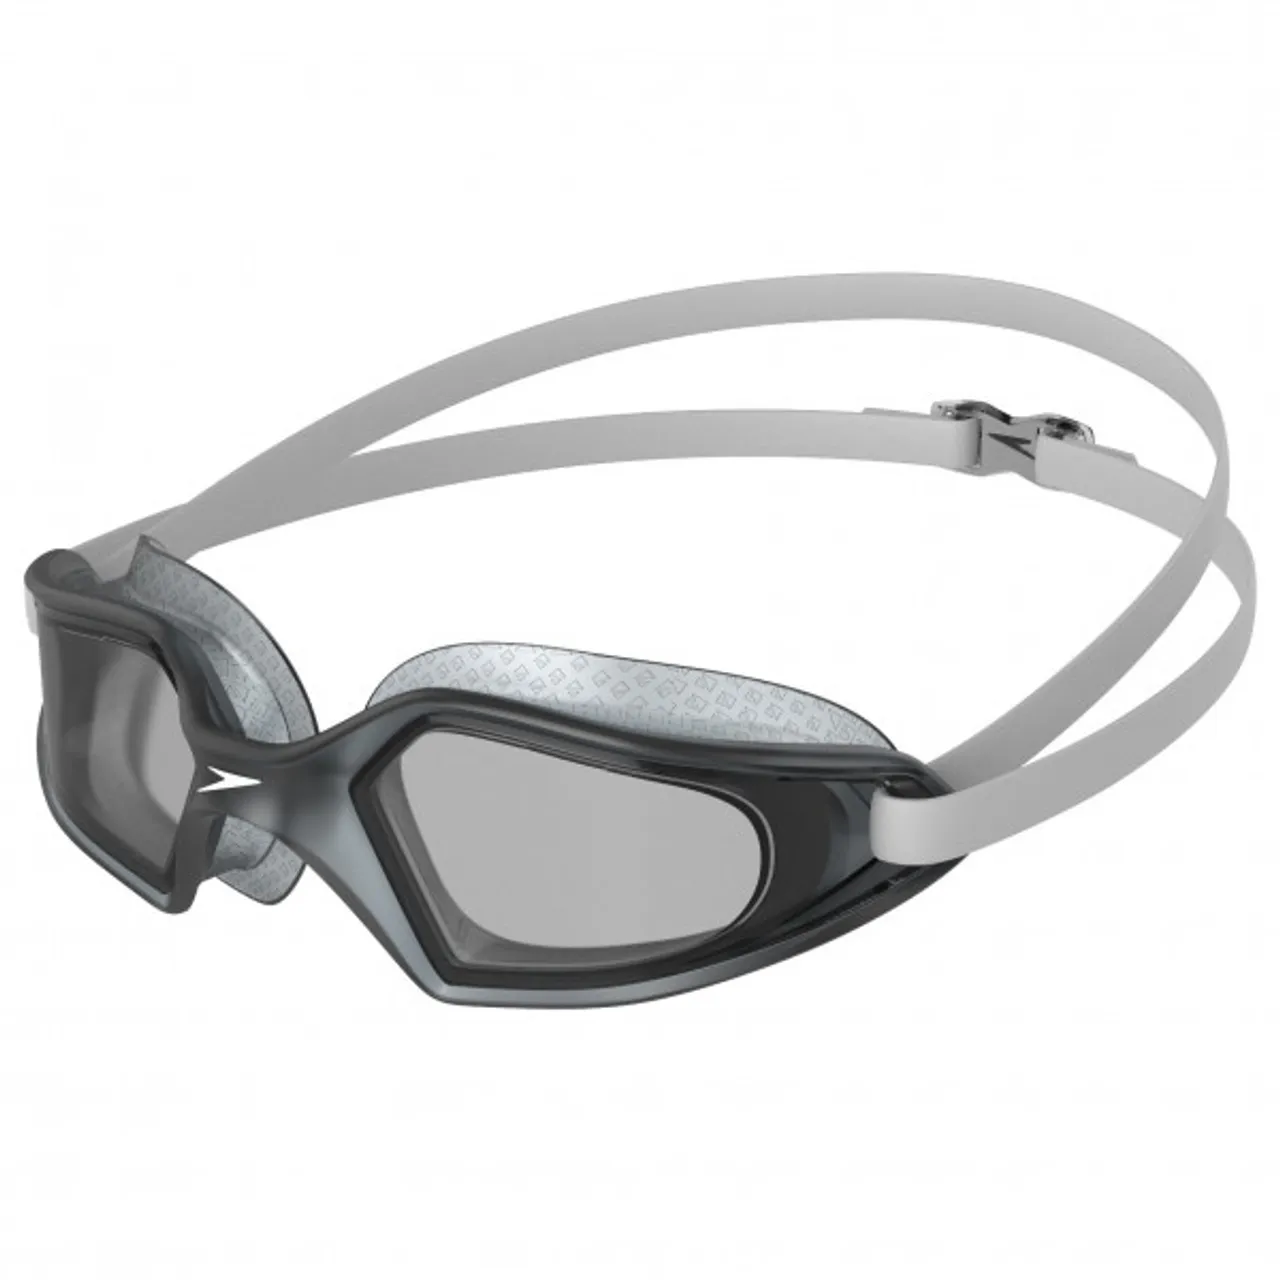 Speedo - Hydropulse - Swimming goggles size One Size, grey